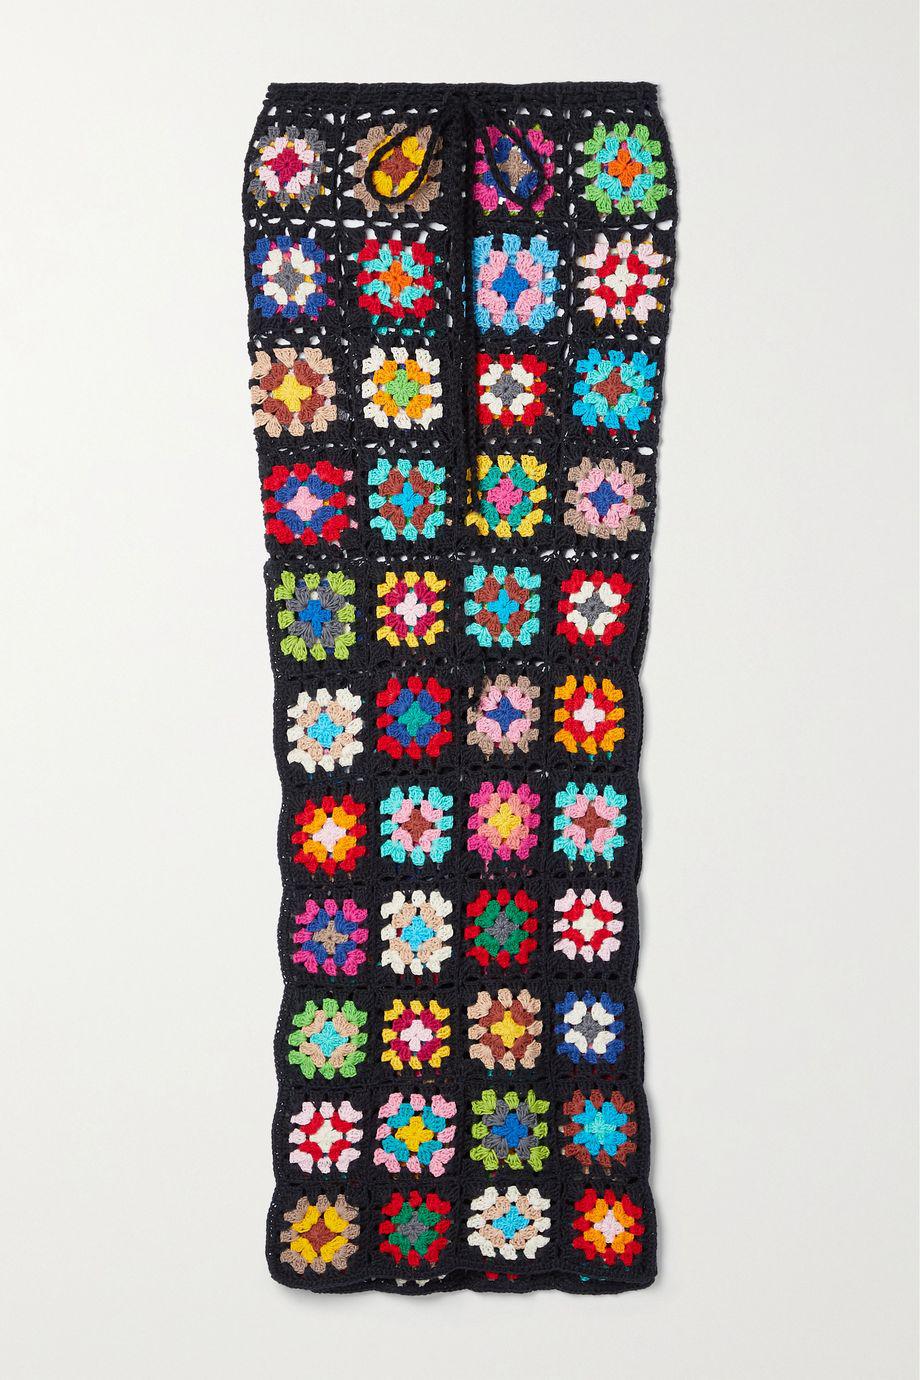 Love Squares crocheted cotton midi skirt by ALIX PINHO